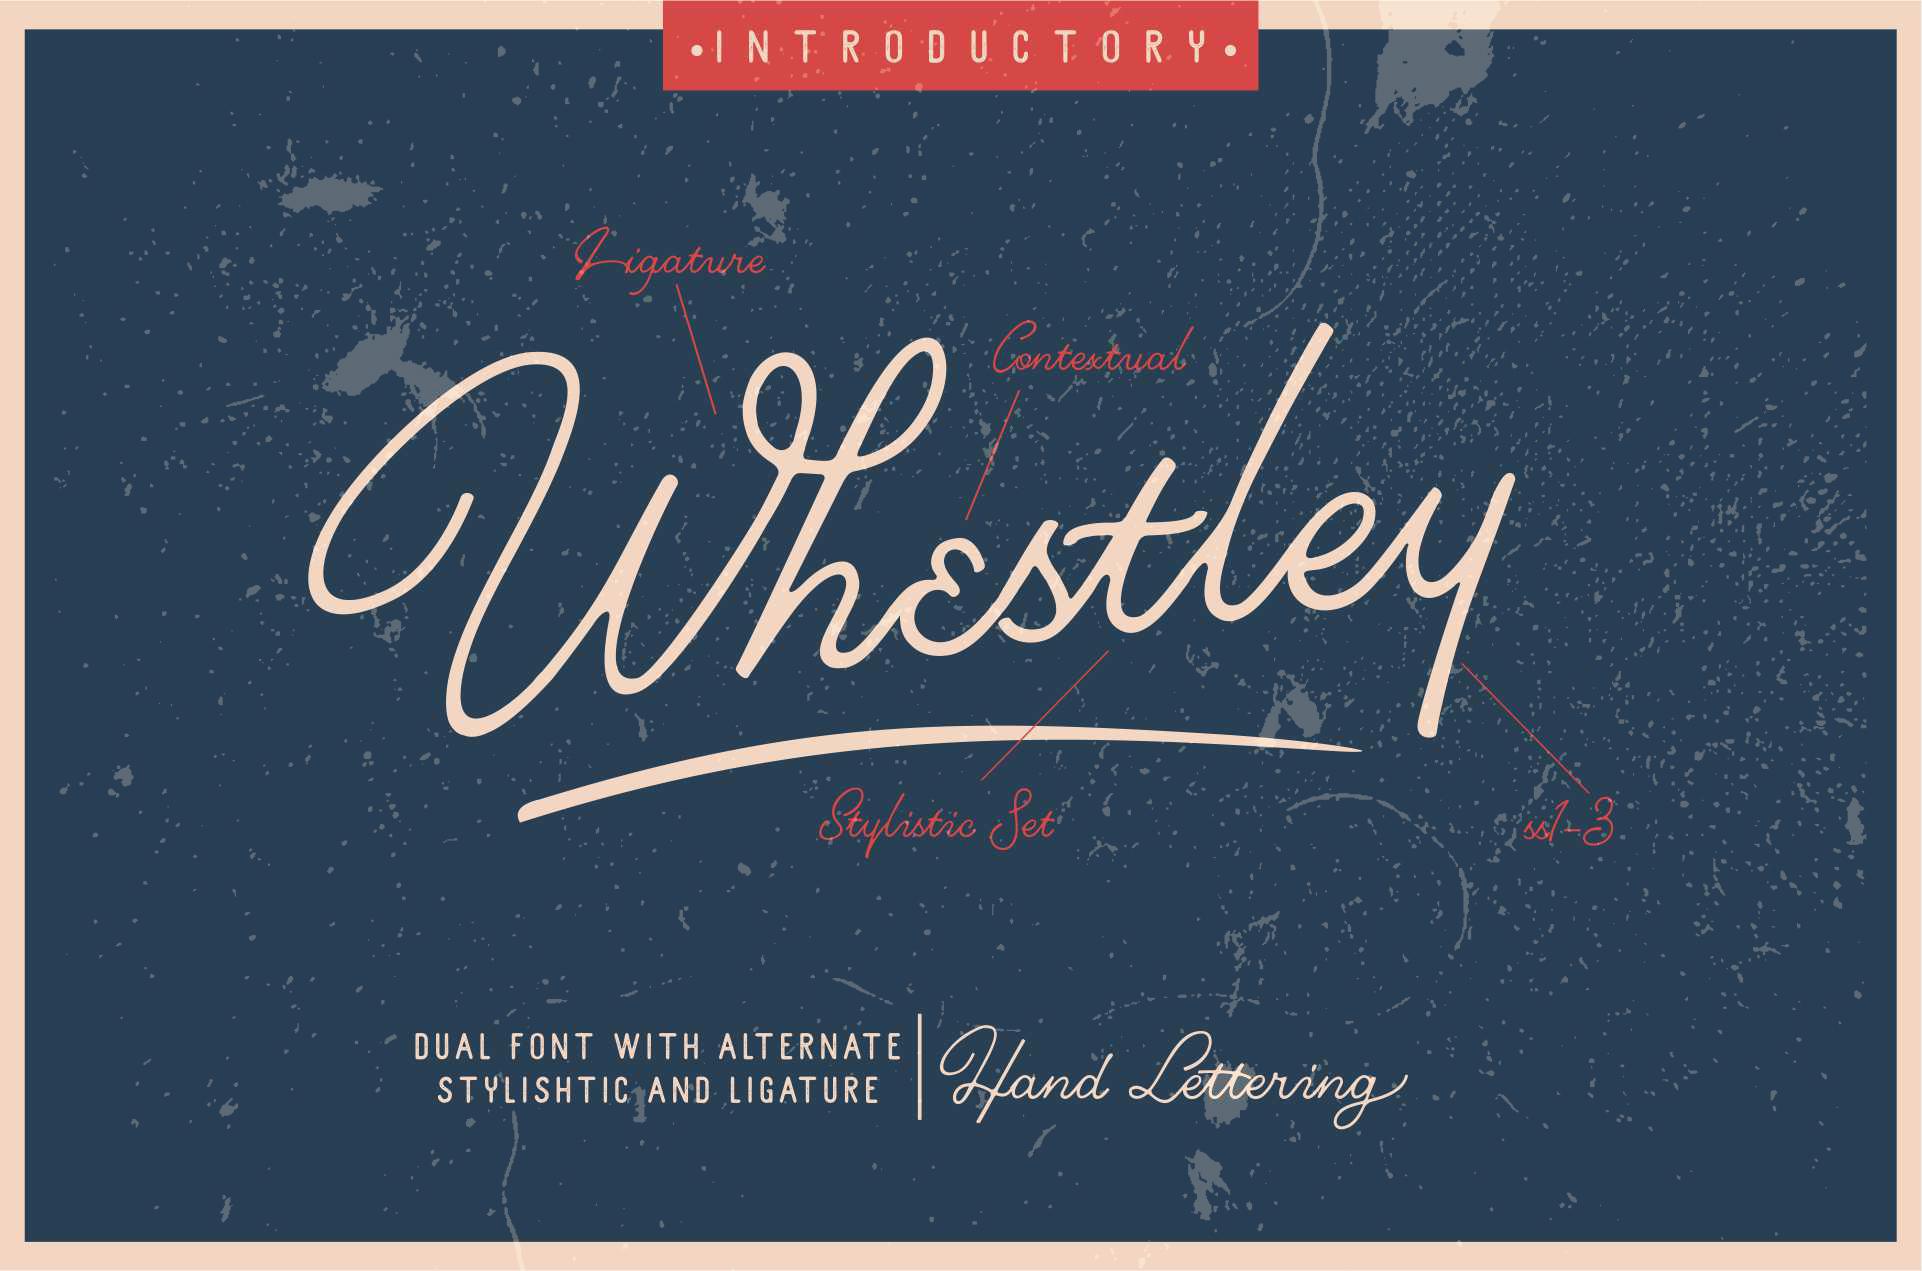 Whestley's Font